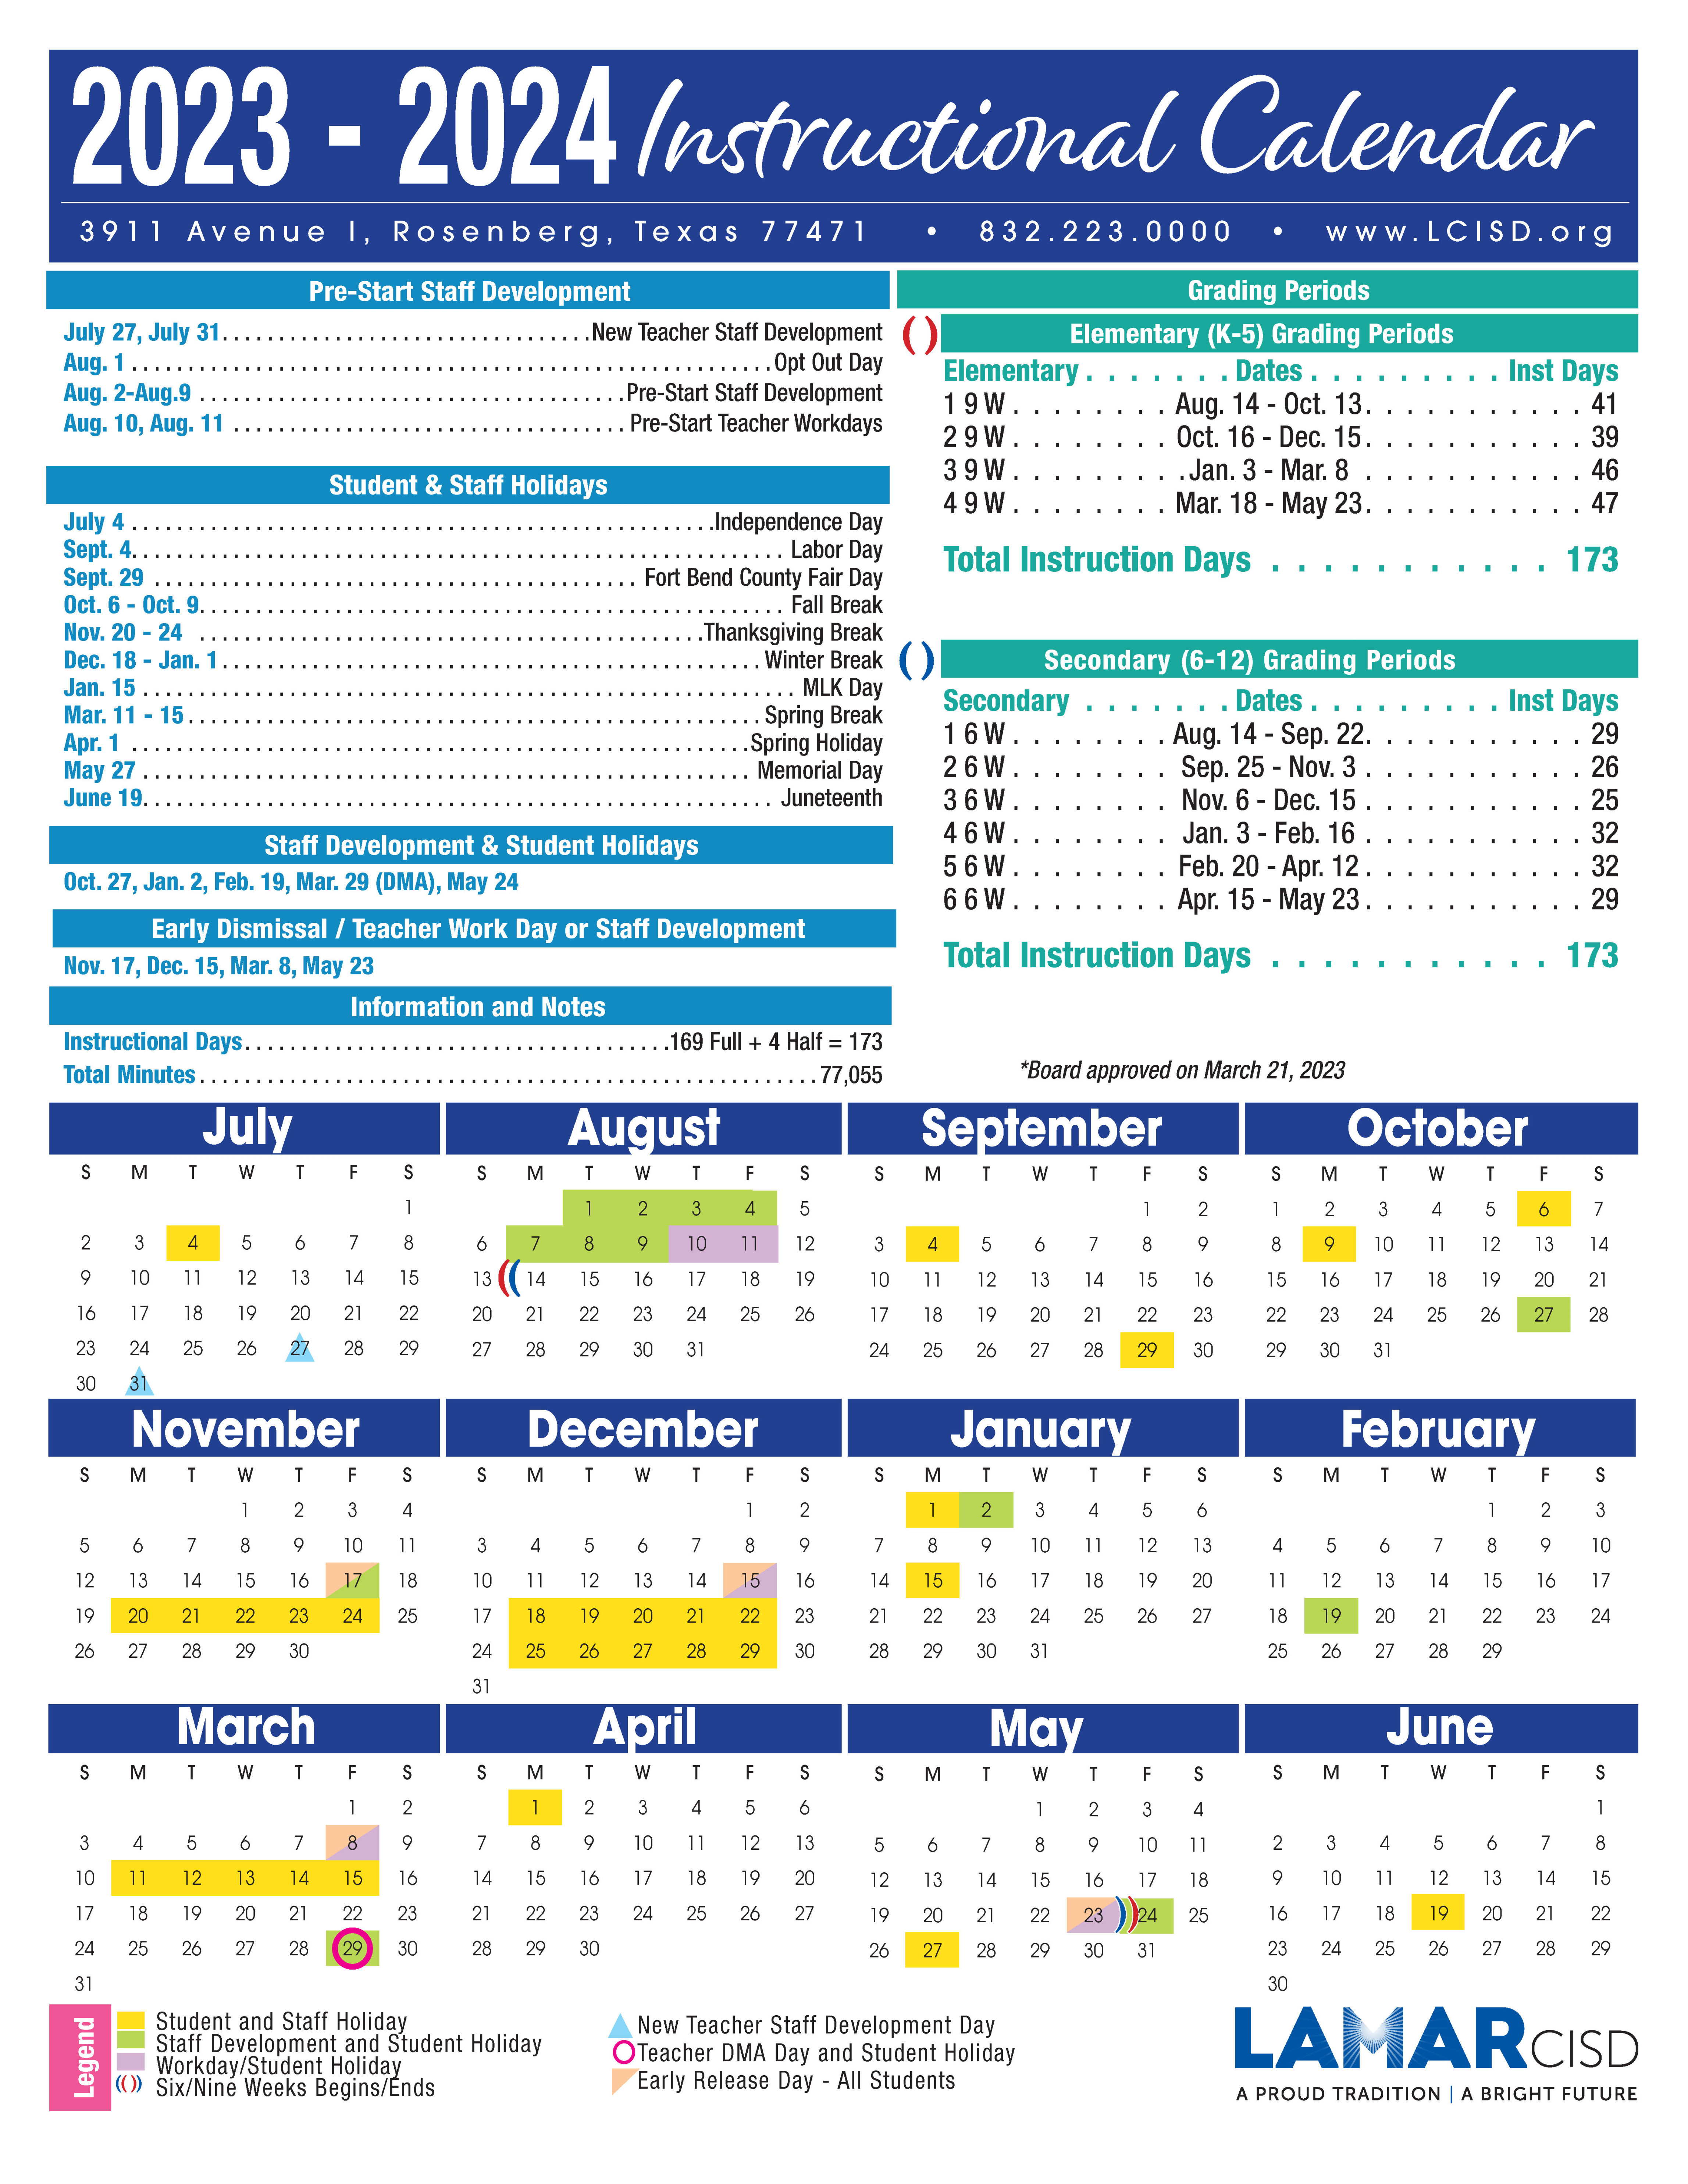 LCISD - Instructional Calendar Now Available